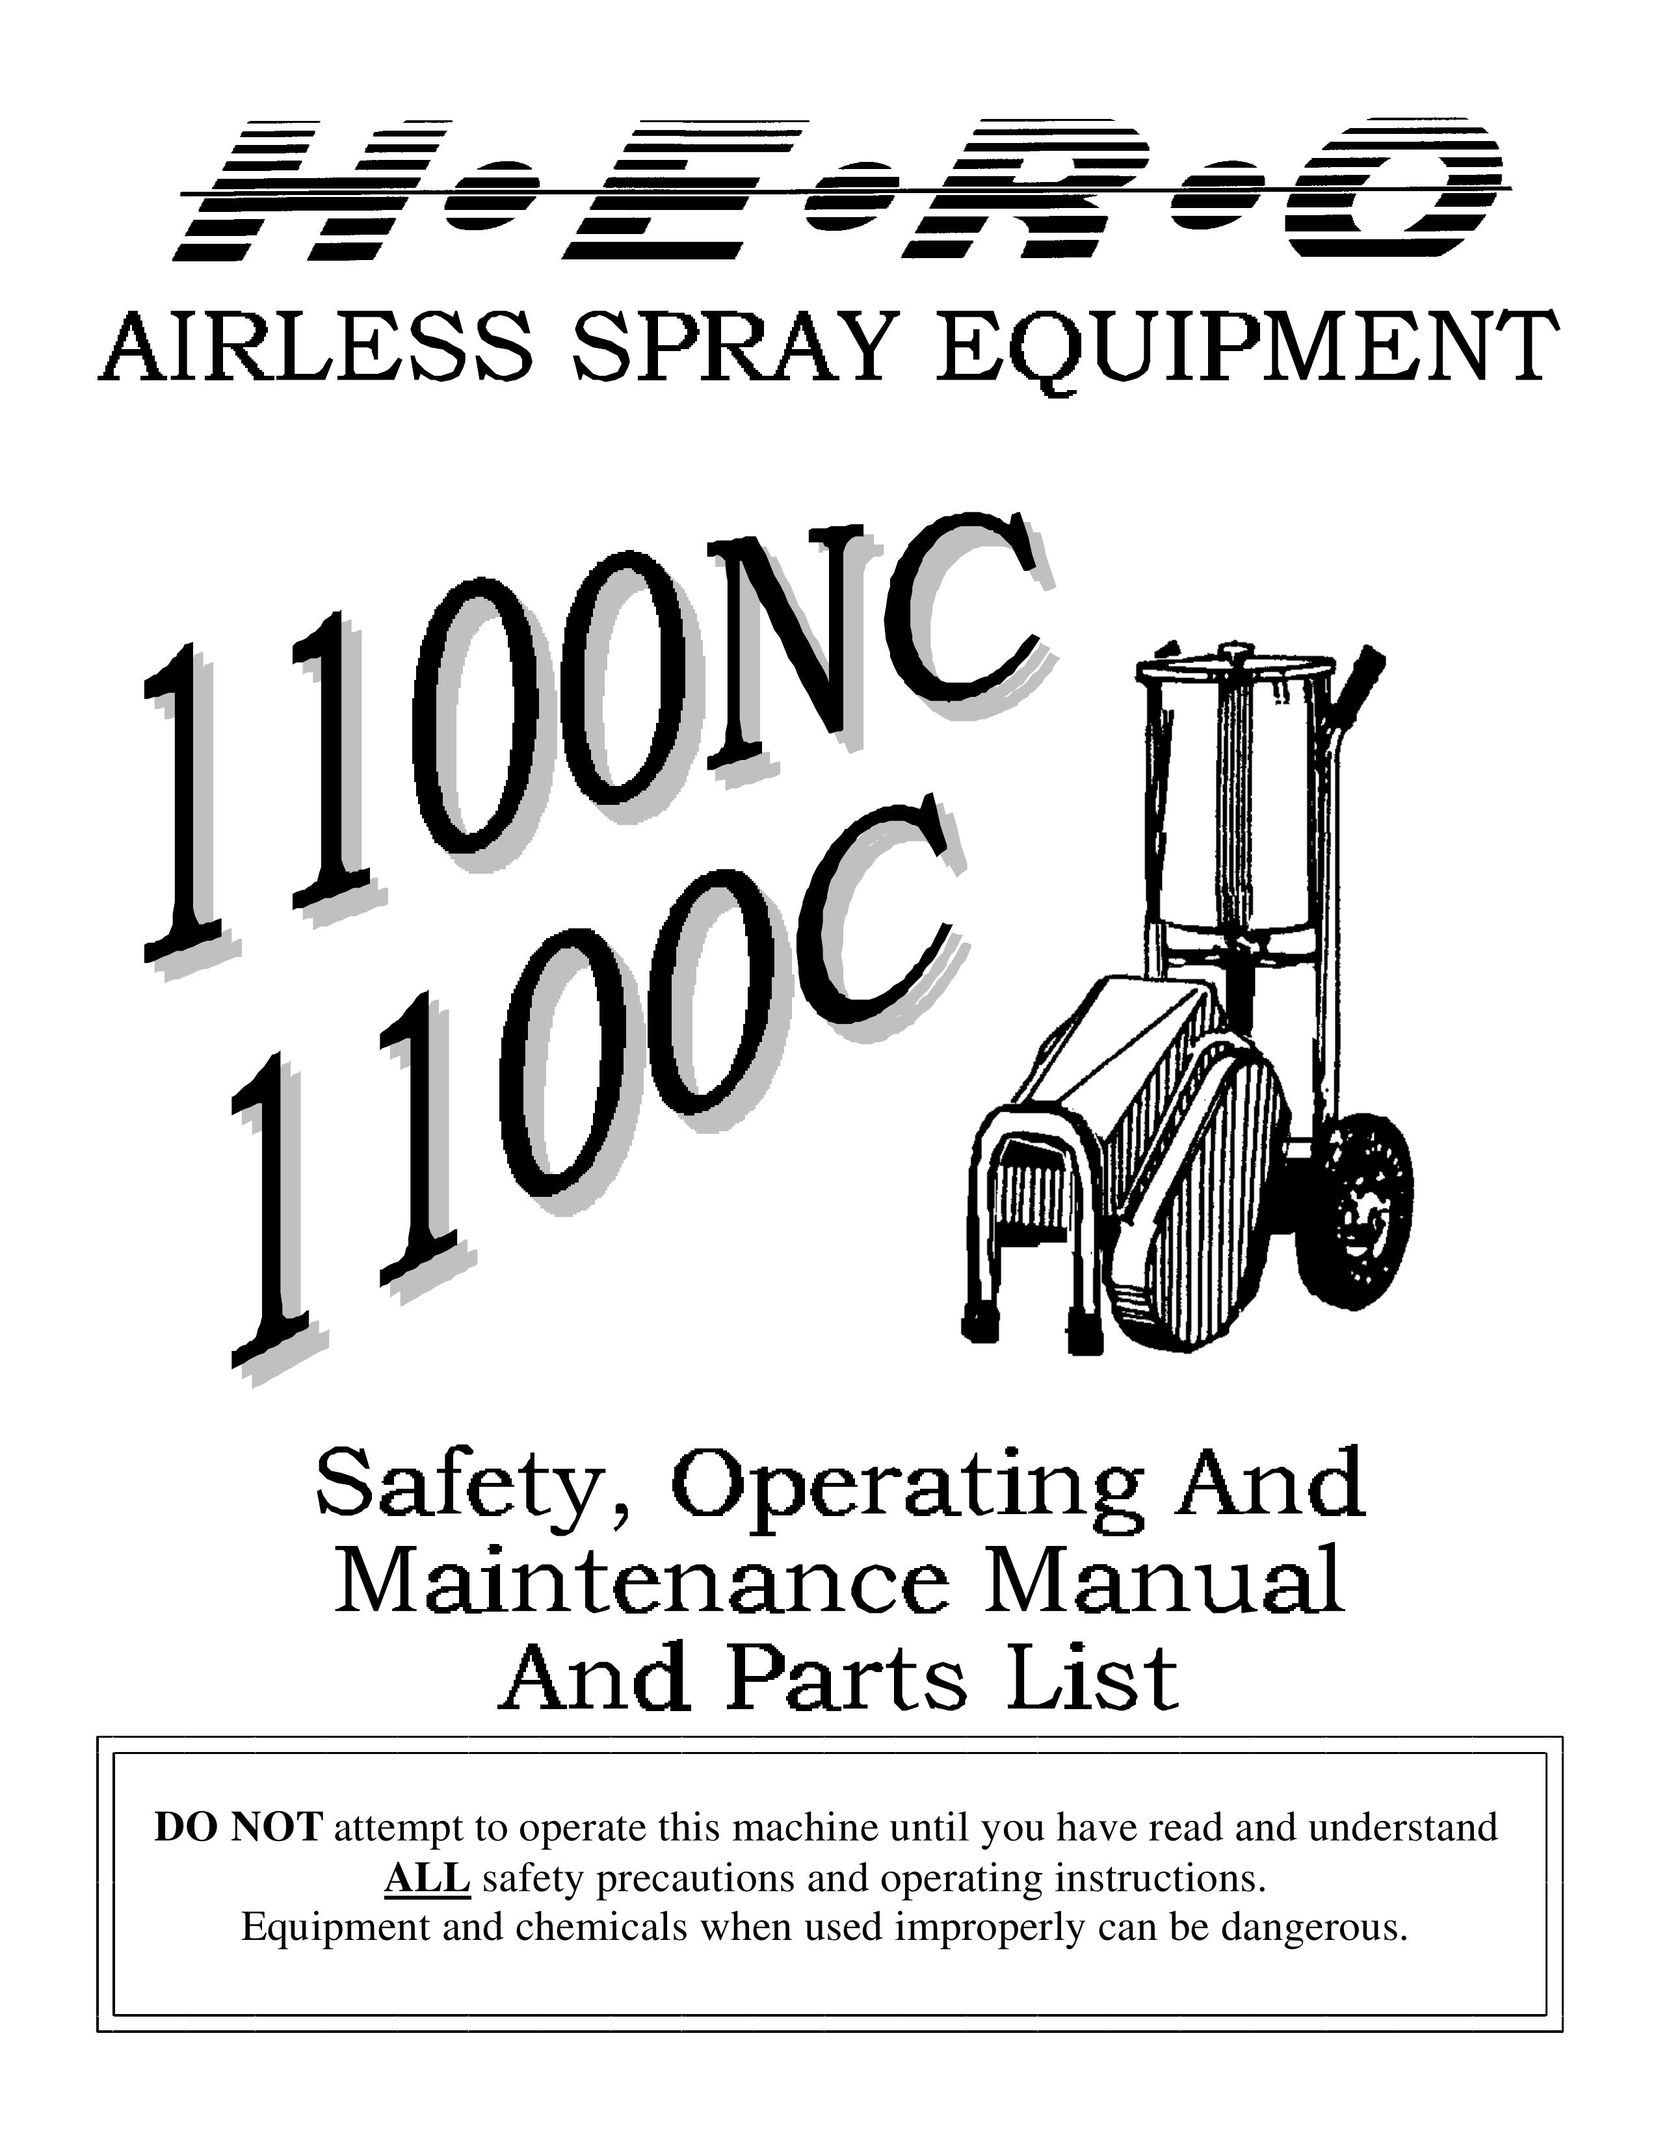 I.C.T.C. Holdings Corporation Airless Spray Equipment Paint Sprayer User Manual